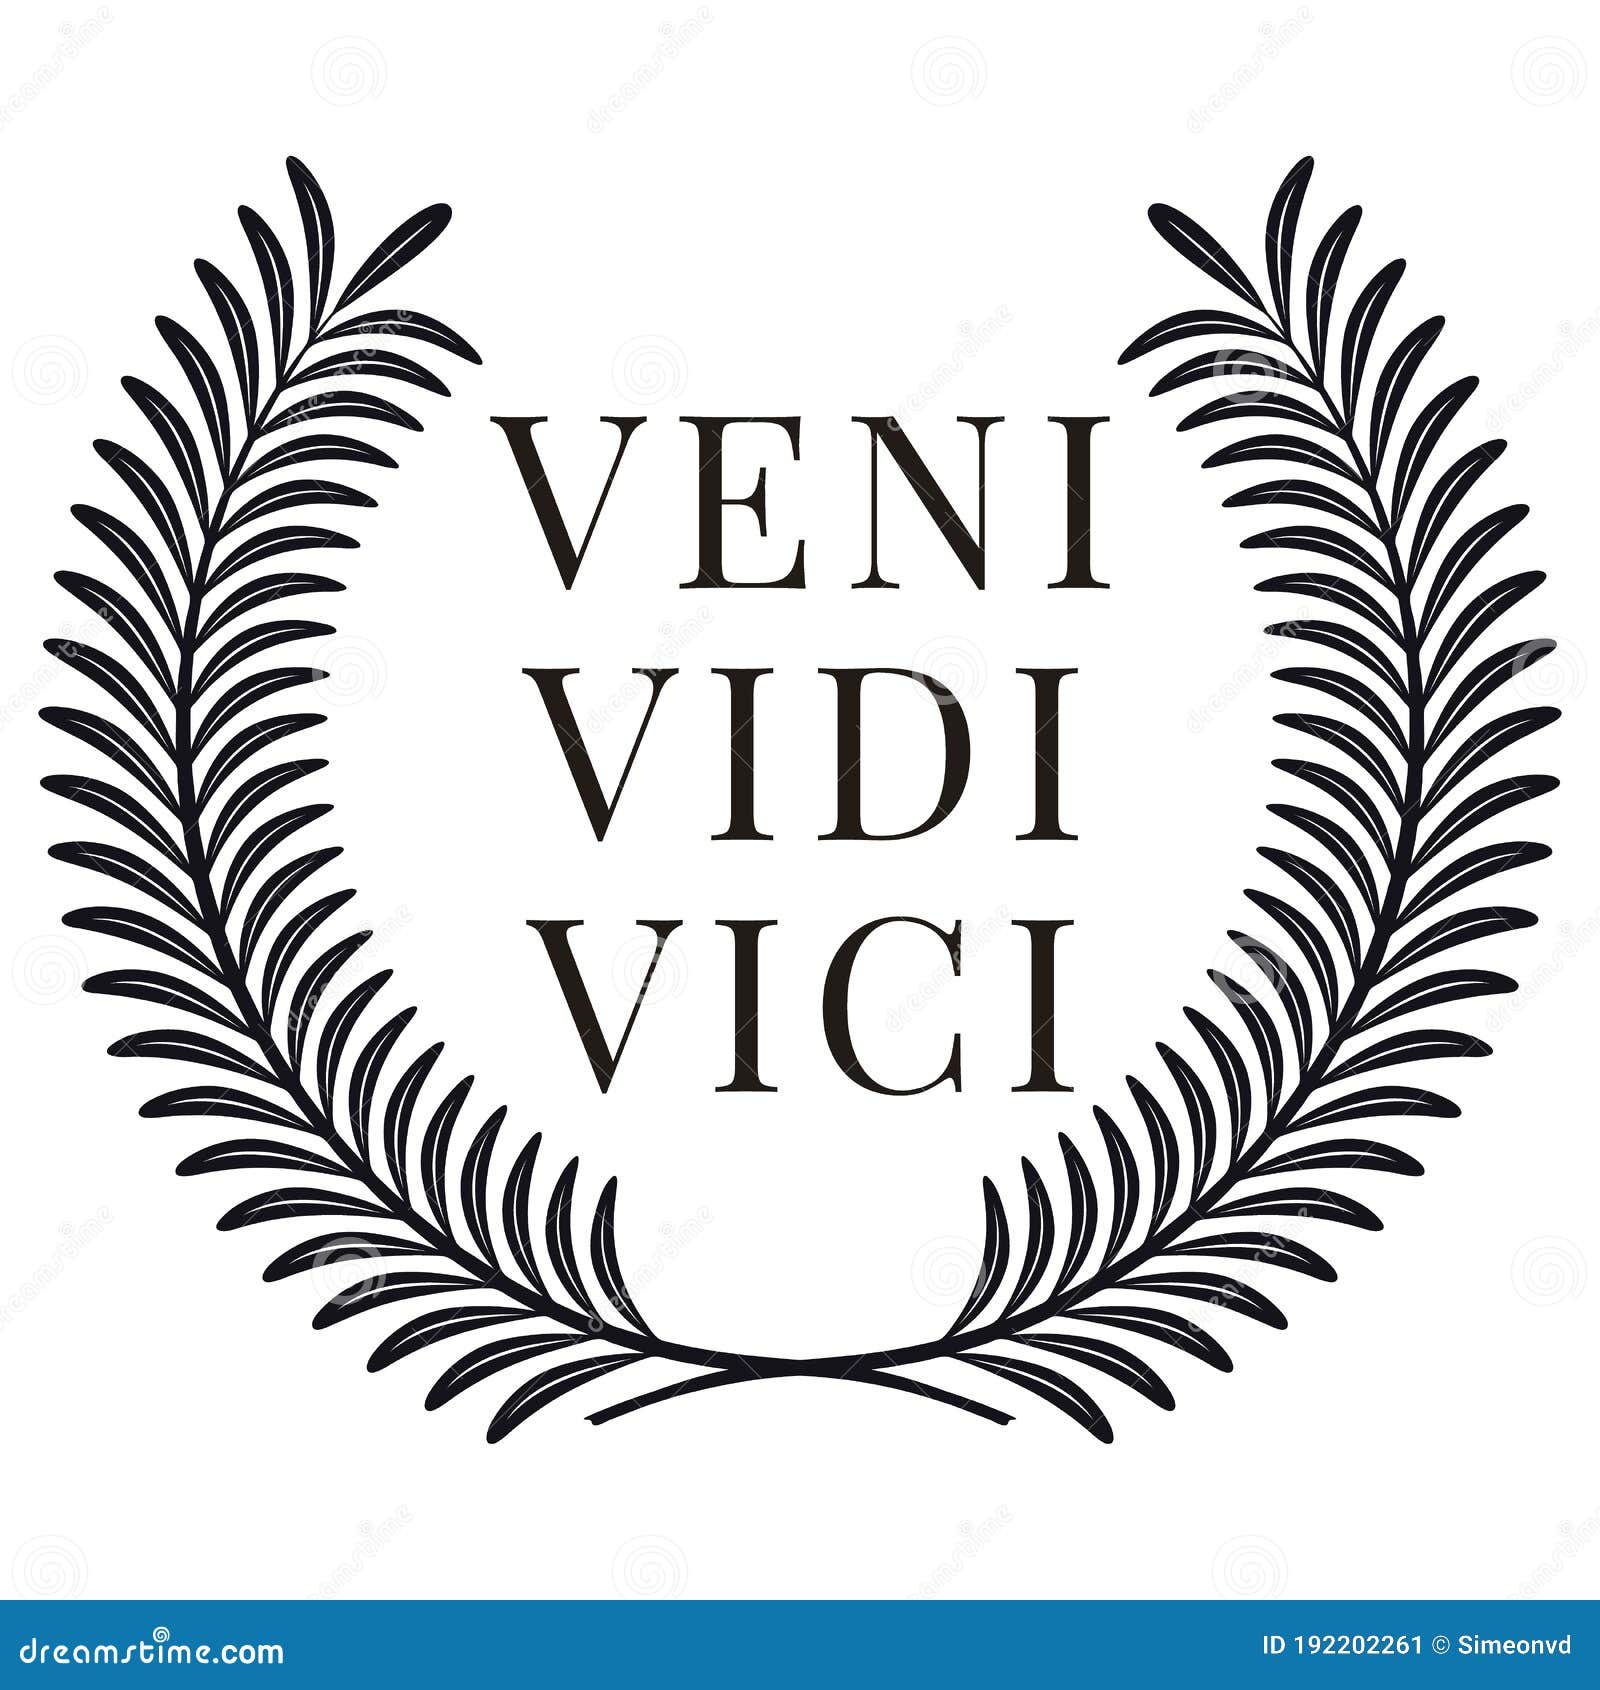 In English, why do we say Veni, vidi, vici in Ecclesiastical pronunciation?  : r/latin